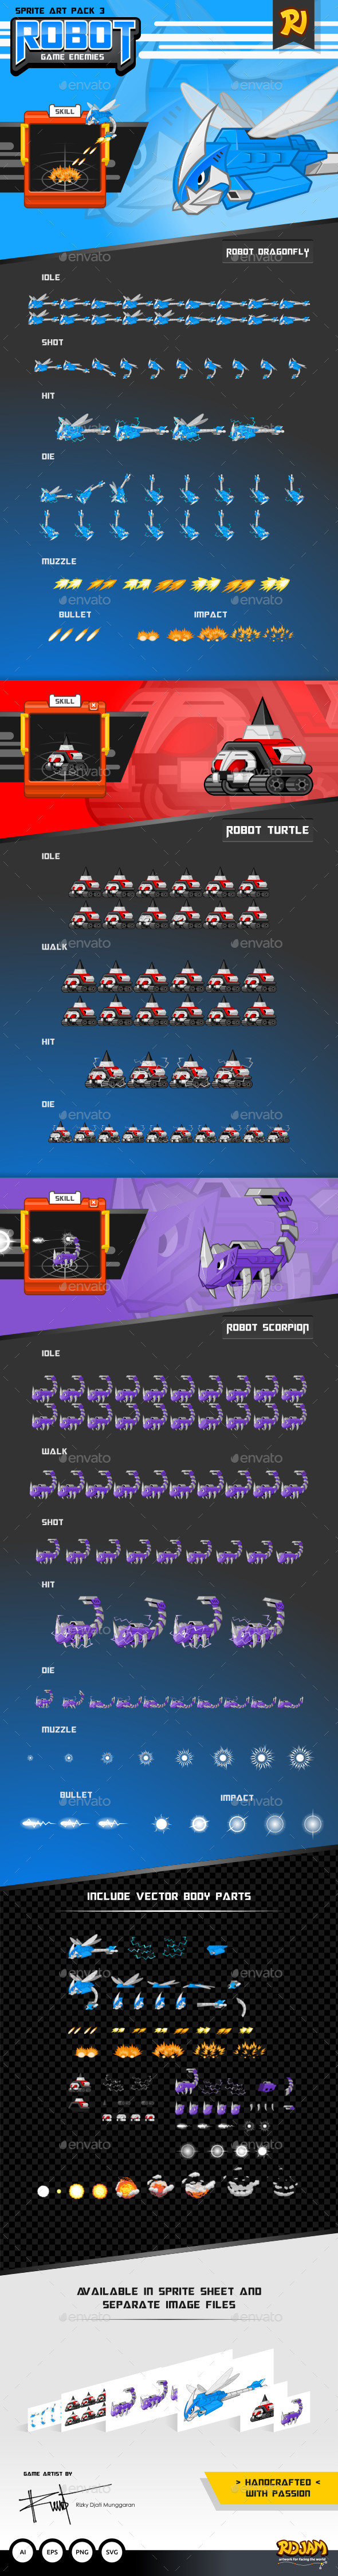 Robot game enemies sprite art pack 3 by ridjam preview